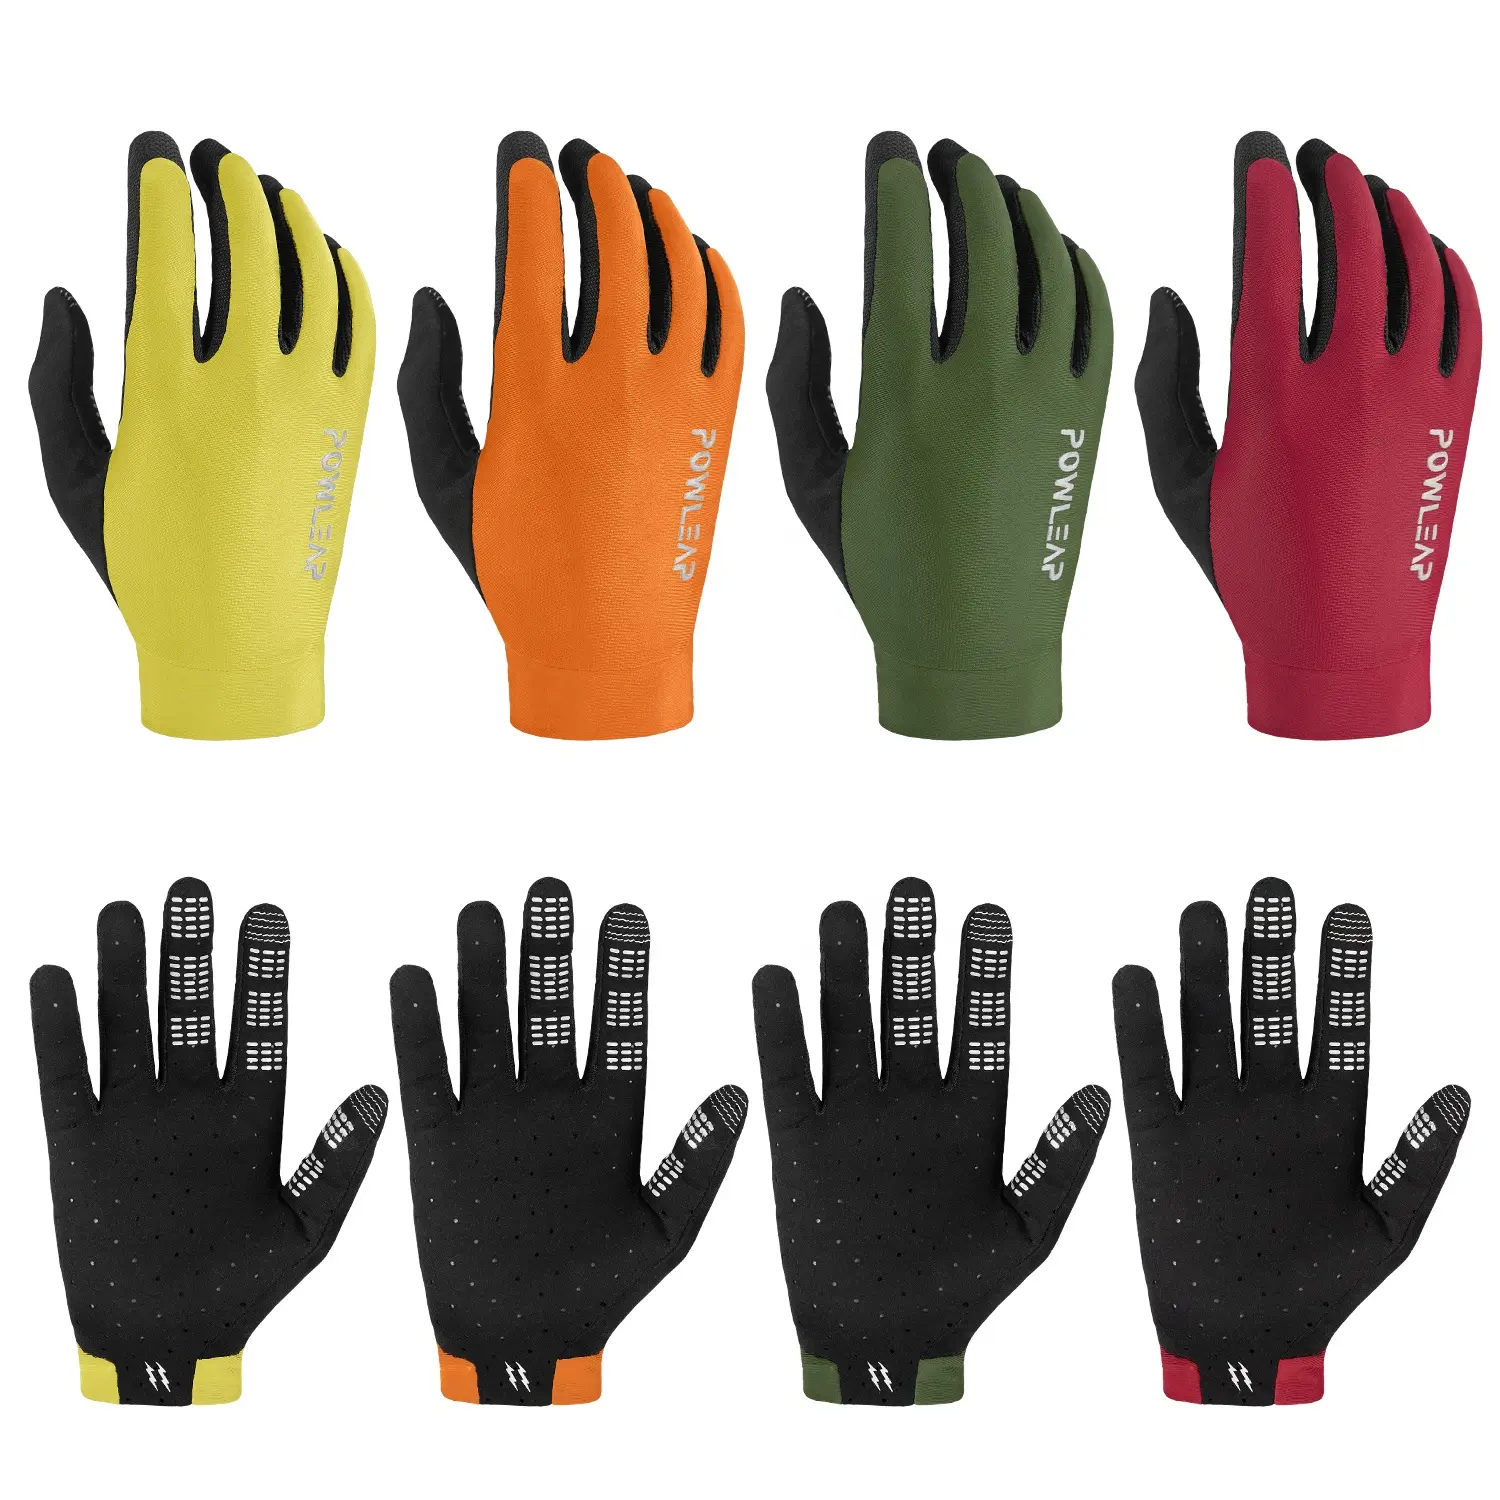 New Style Pure Color Non-slip Mountain Bike Motocross Gloves Touchscreen MTB BMX MX ATV Motorcycle Racing Riding Gloves